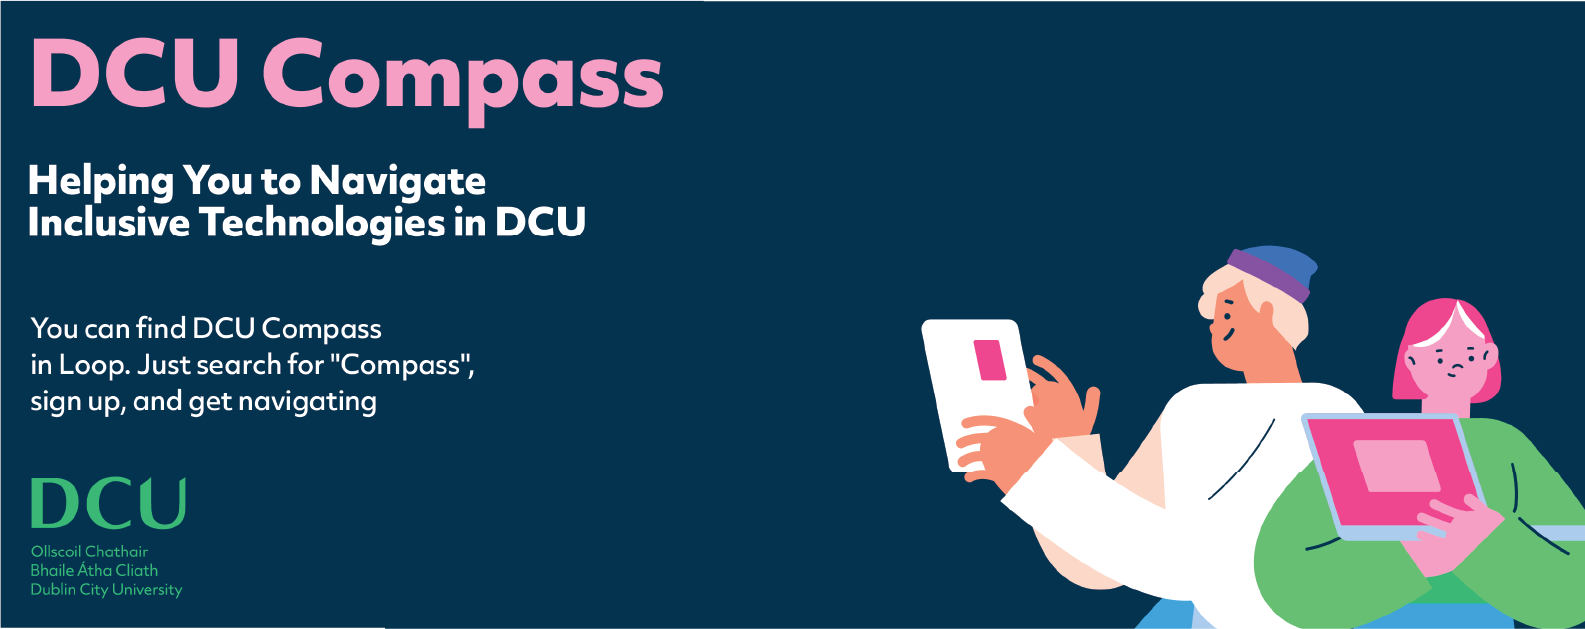 DCU_Compass. helping you to navigate inclusive technologies in DCU